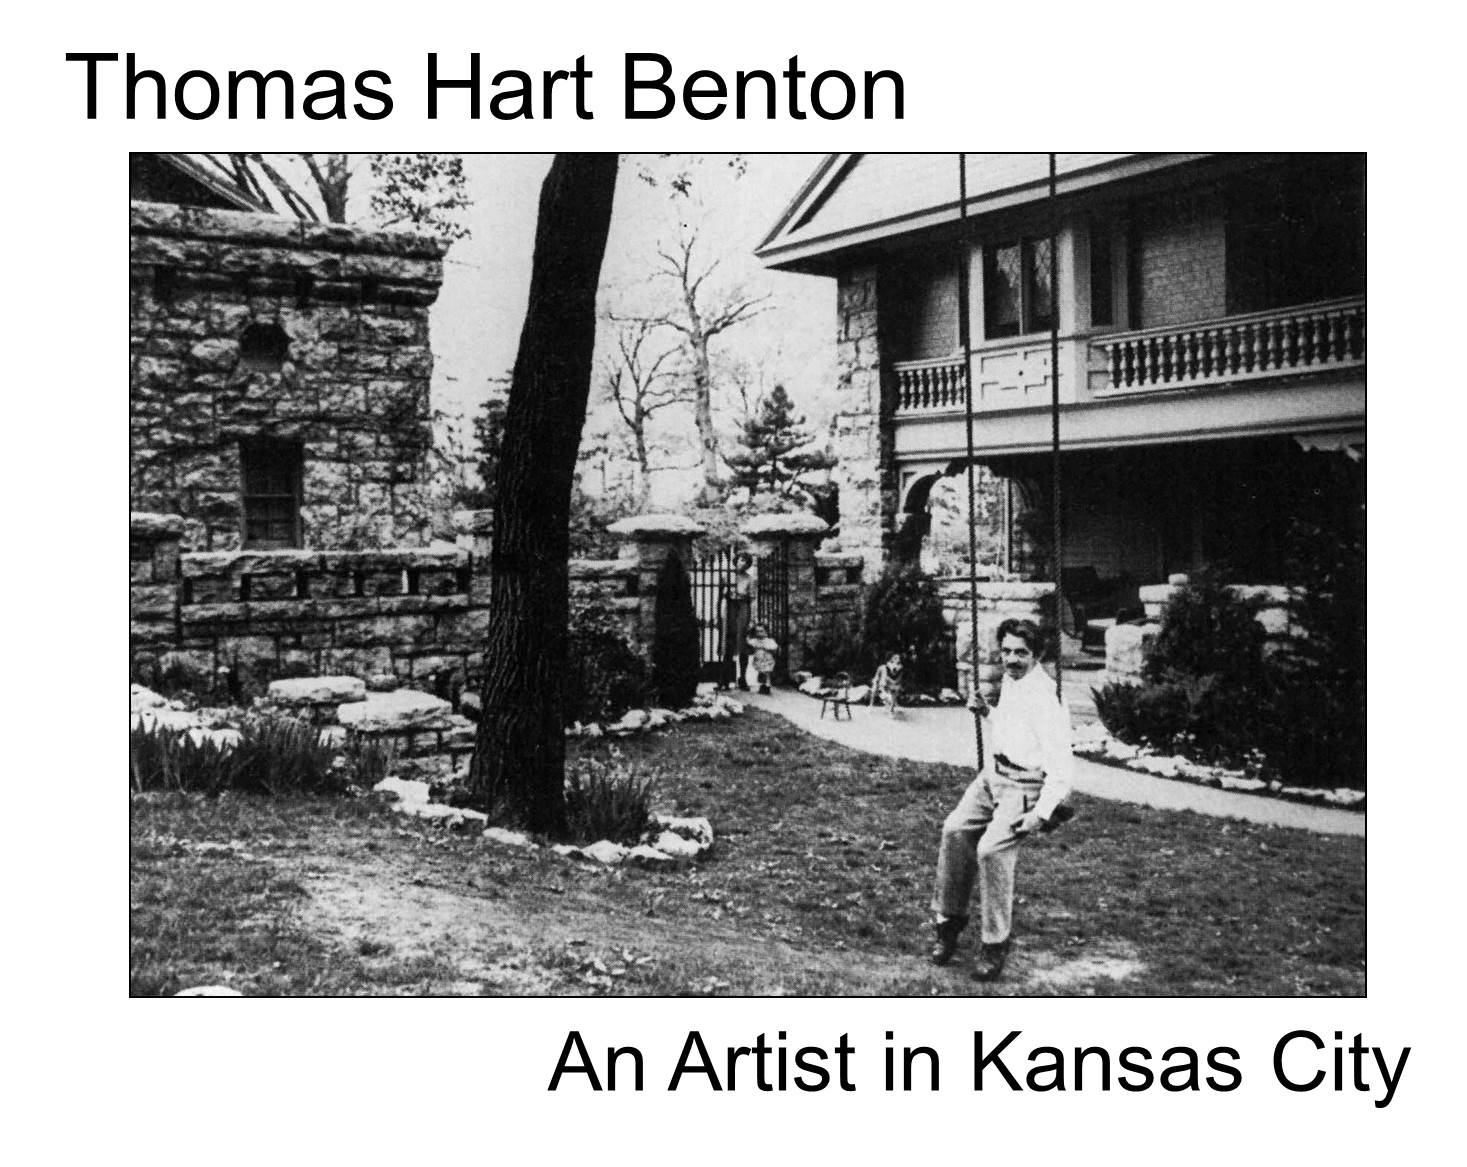 Benton outside of his home